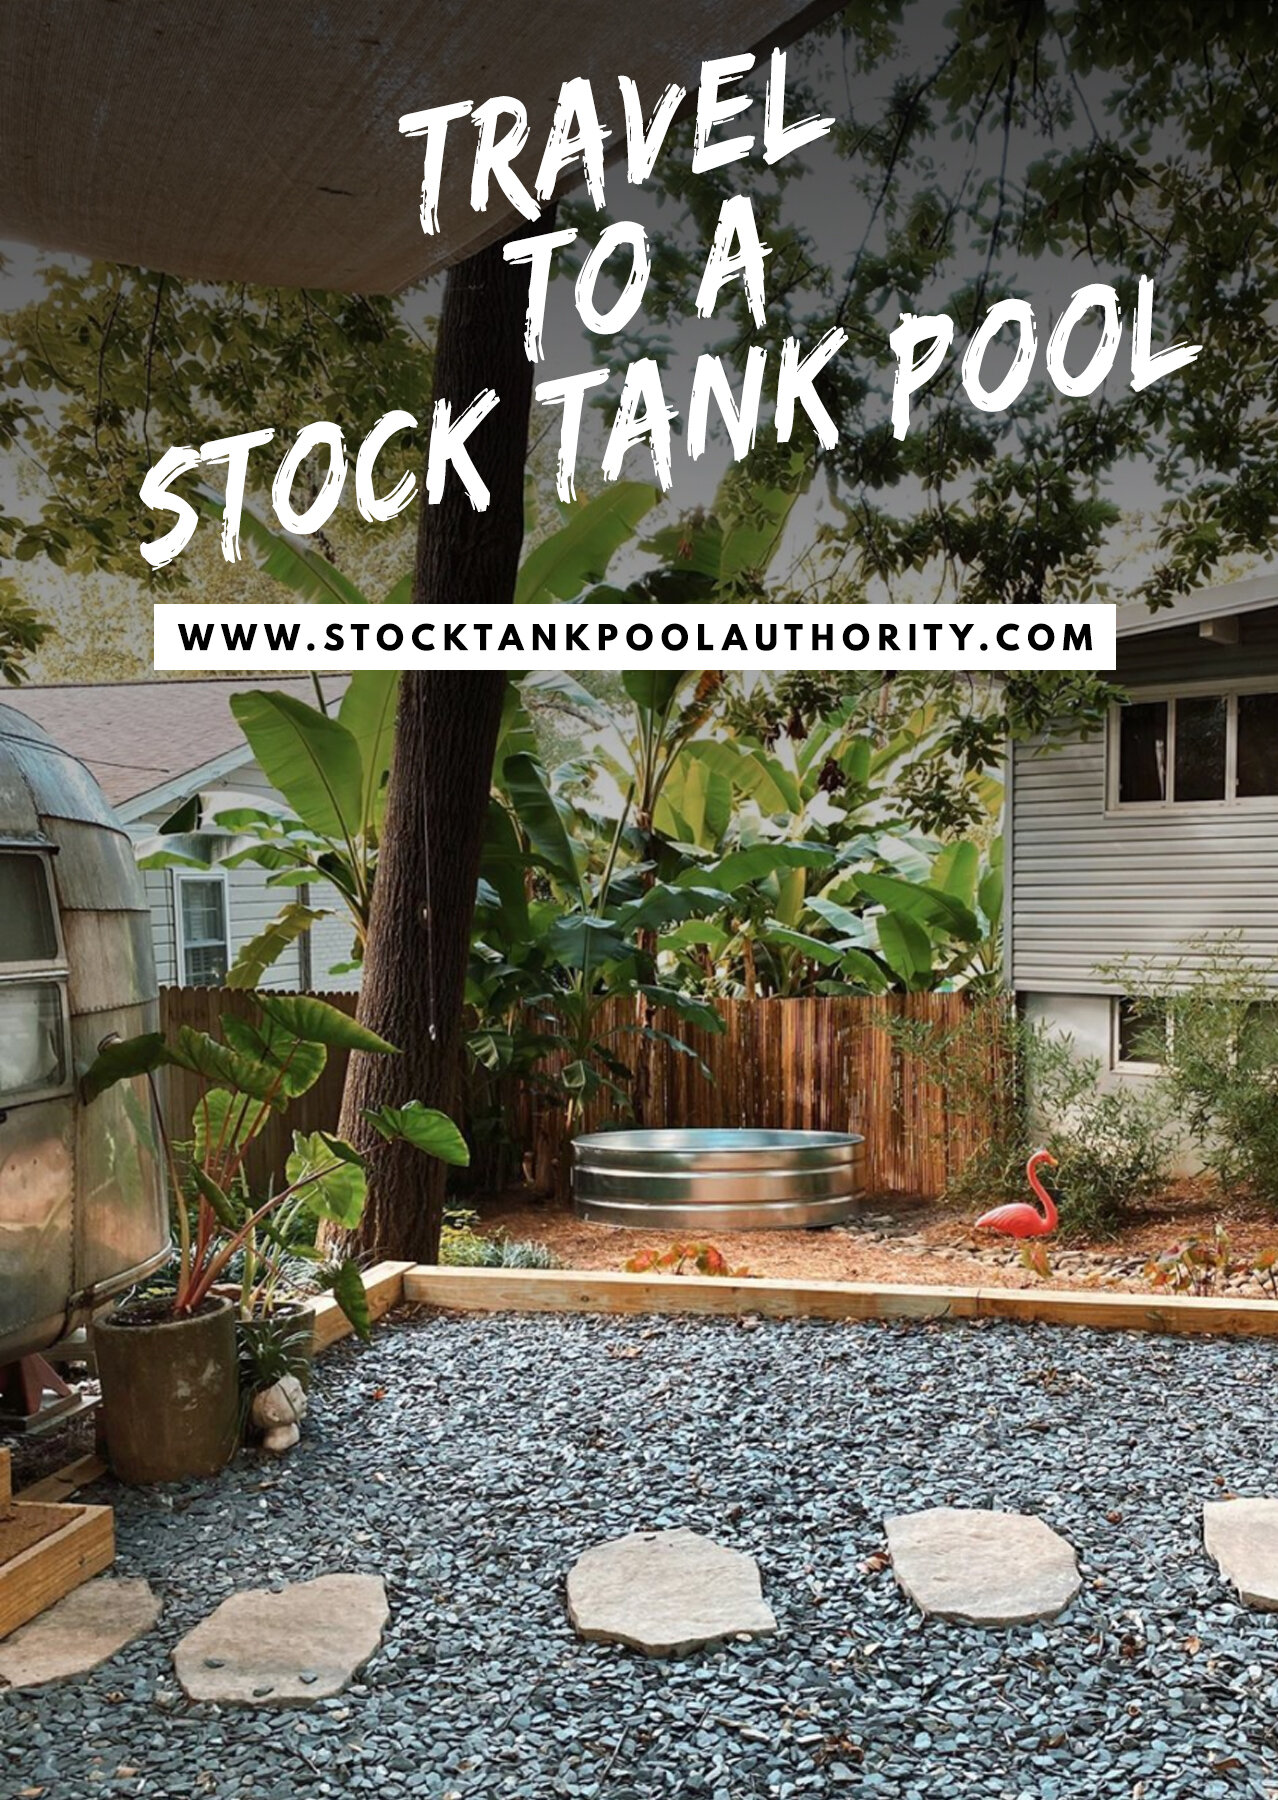 Stock Tank Pool Authority Pinterest Stock Tank Pool Travel.jpg